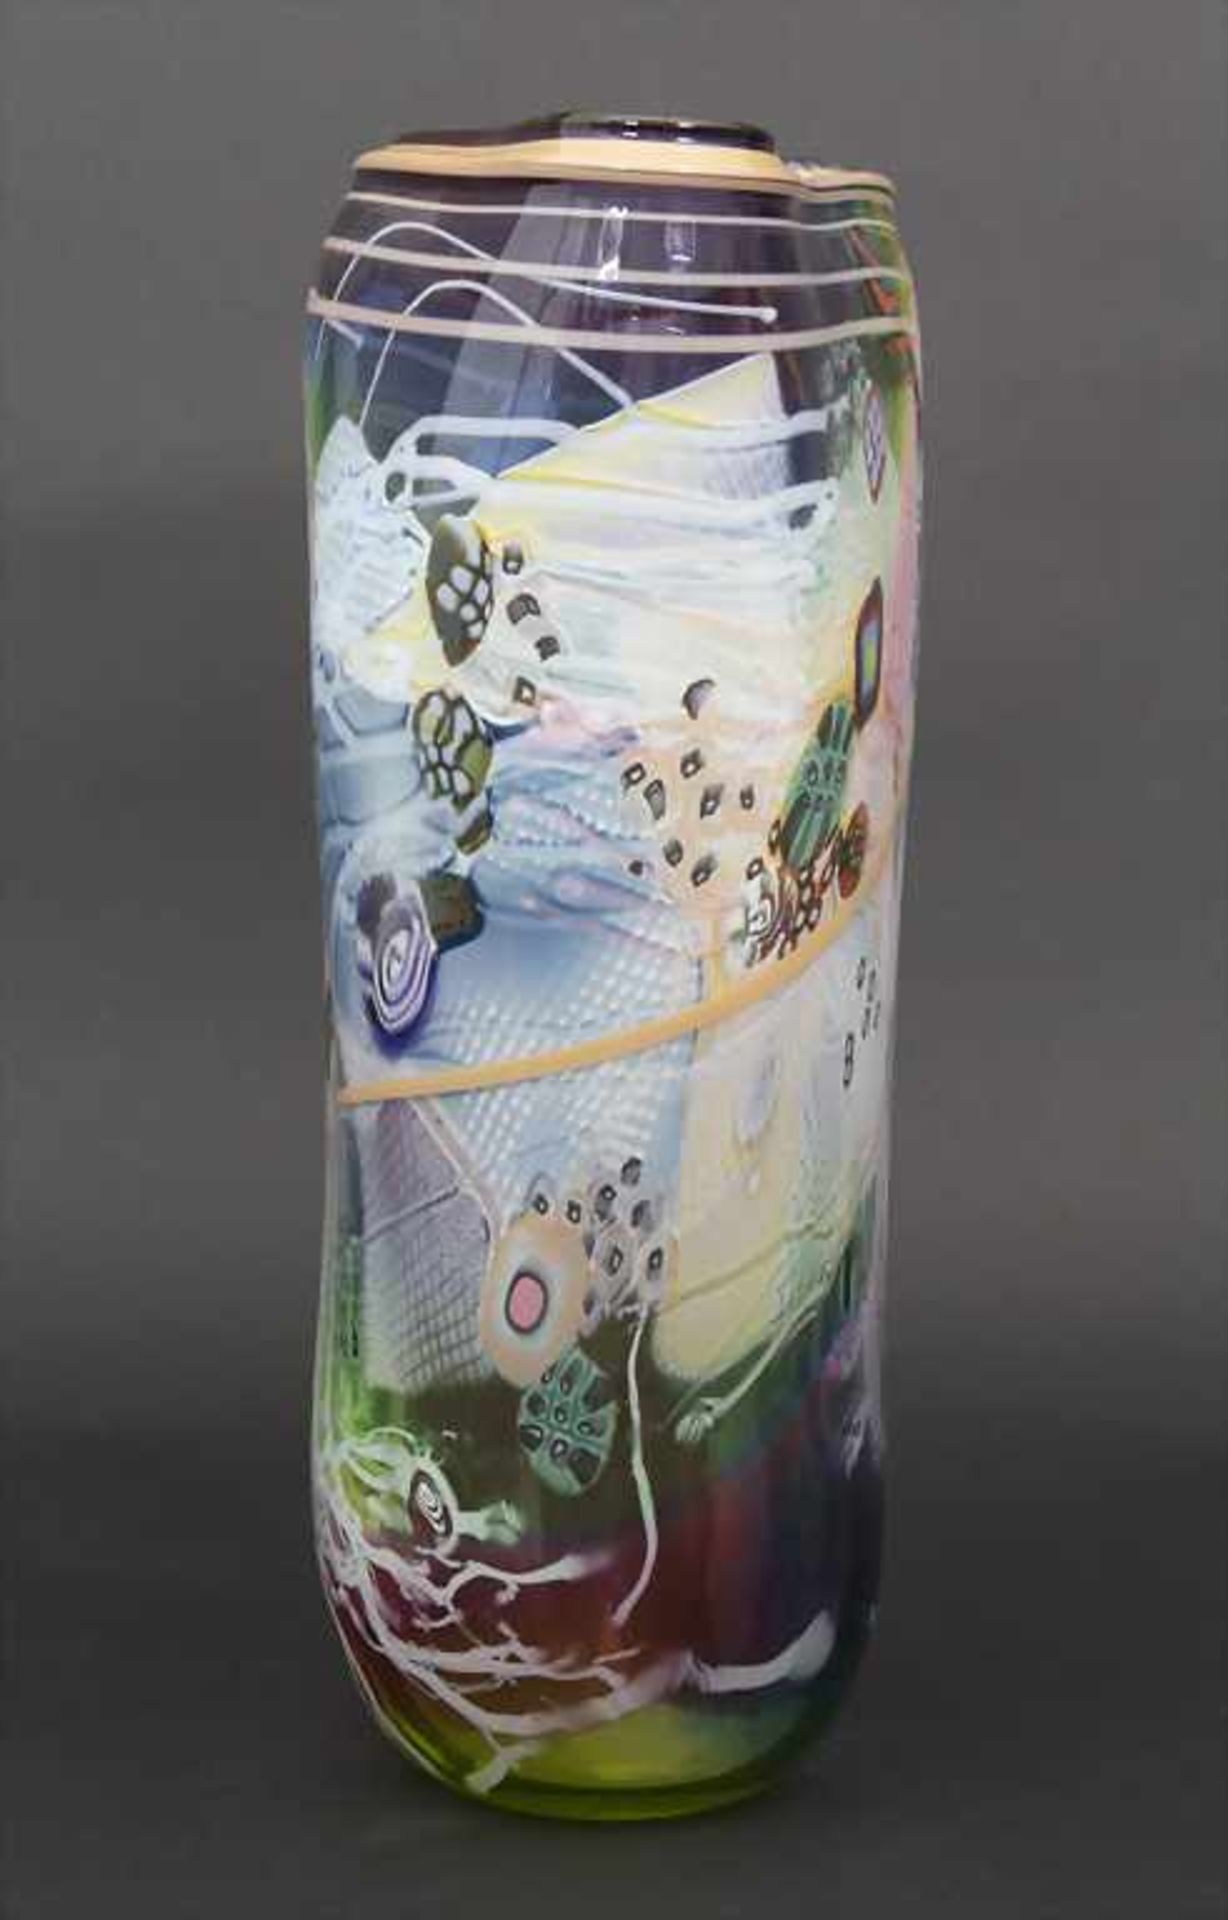 Designer-Glasvase / A design glass vase, Wes Hunting, Wisconsin, um 1980 - Bild 4 aus 7